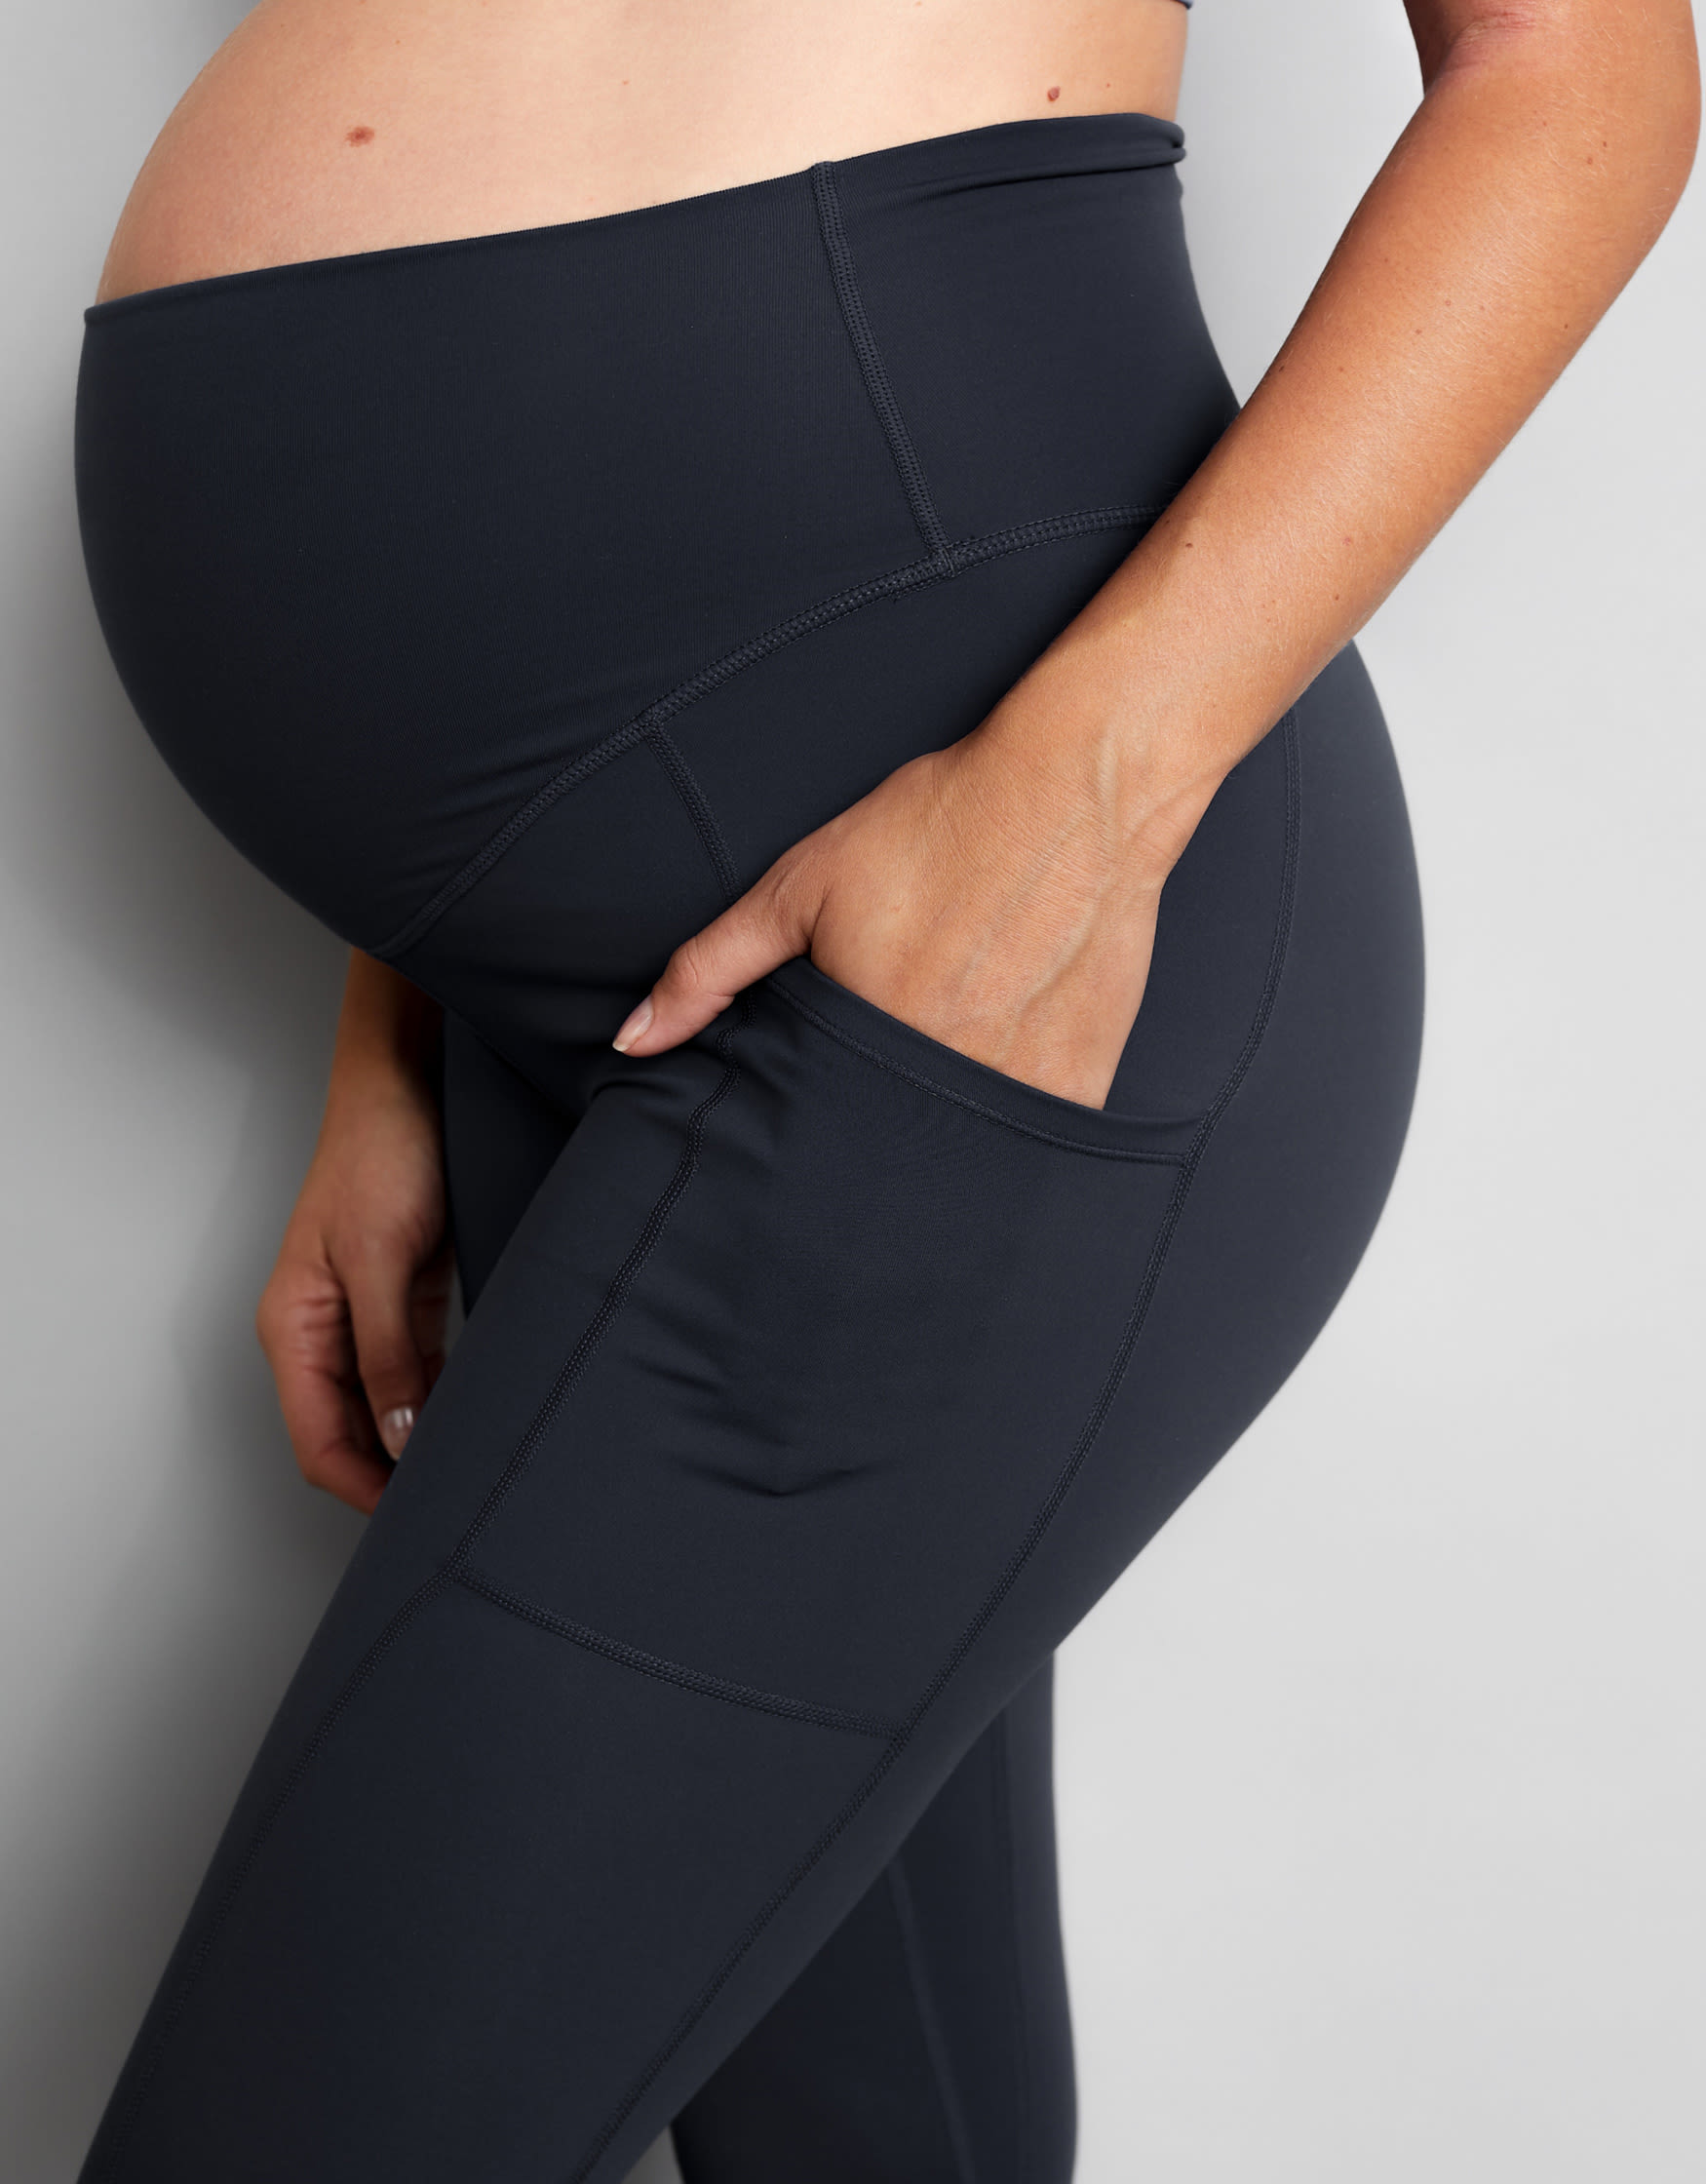 Brasilfit Activewear Maternity Tights